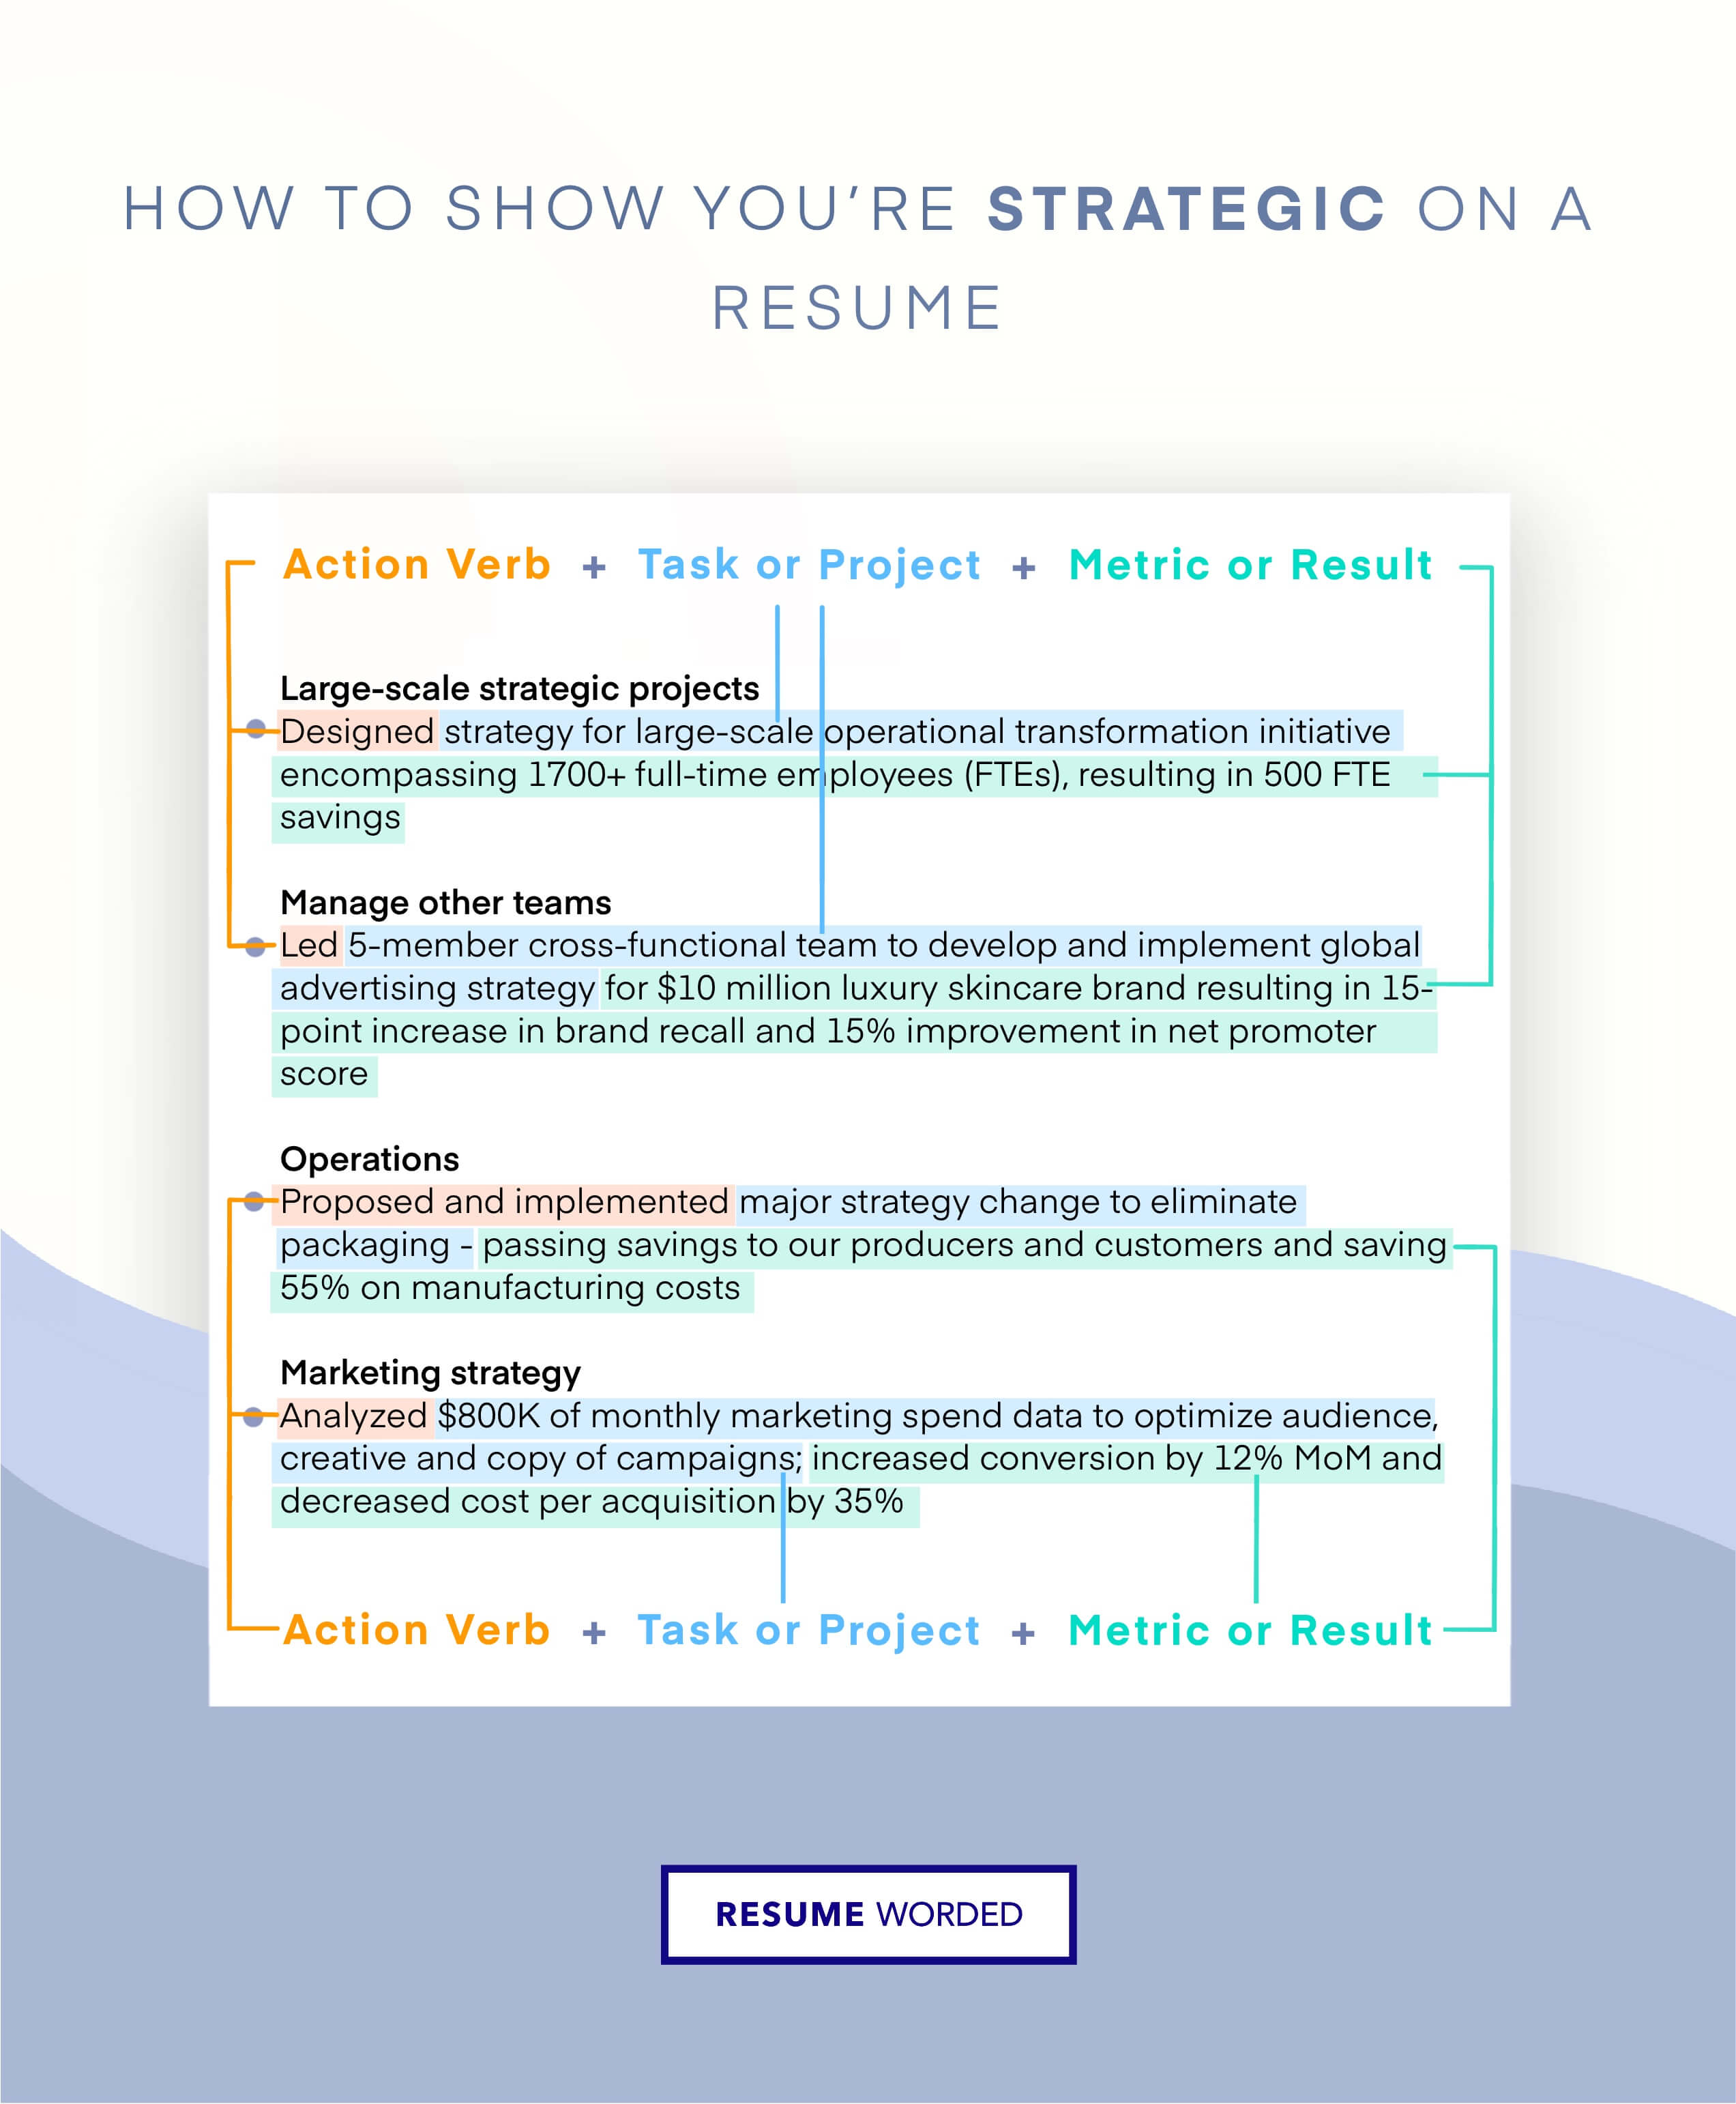 Demonstrate strategic insight - Executive Recruiter CV